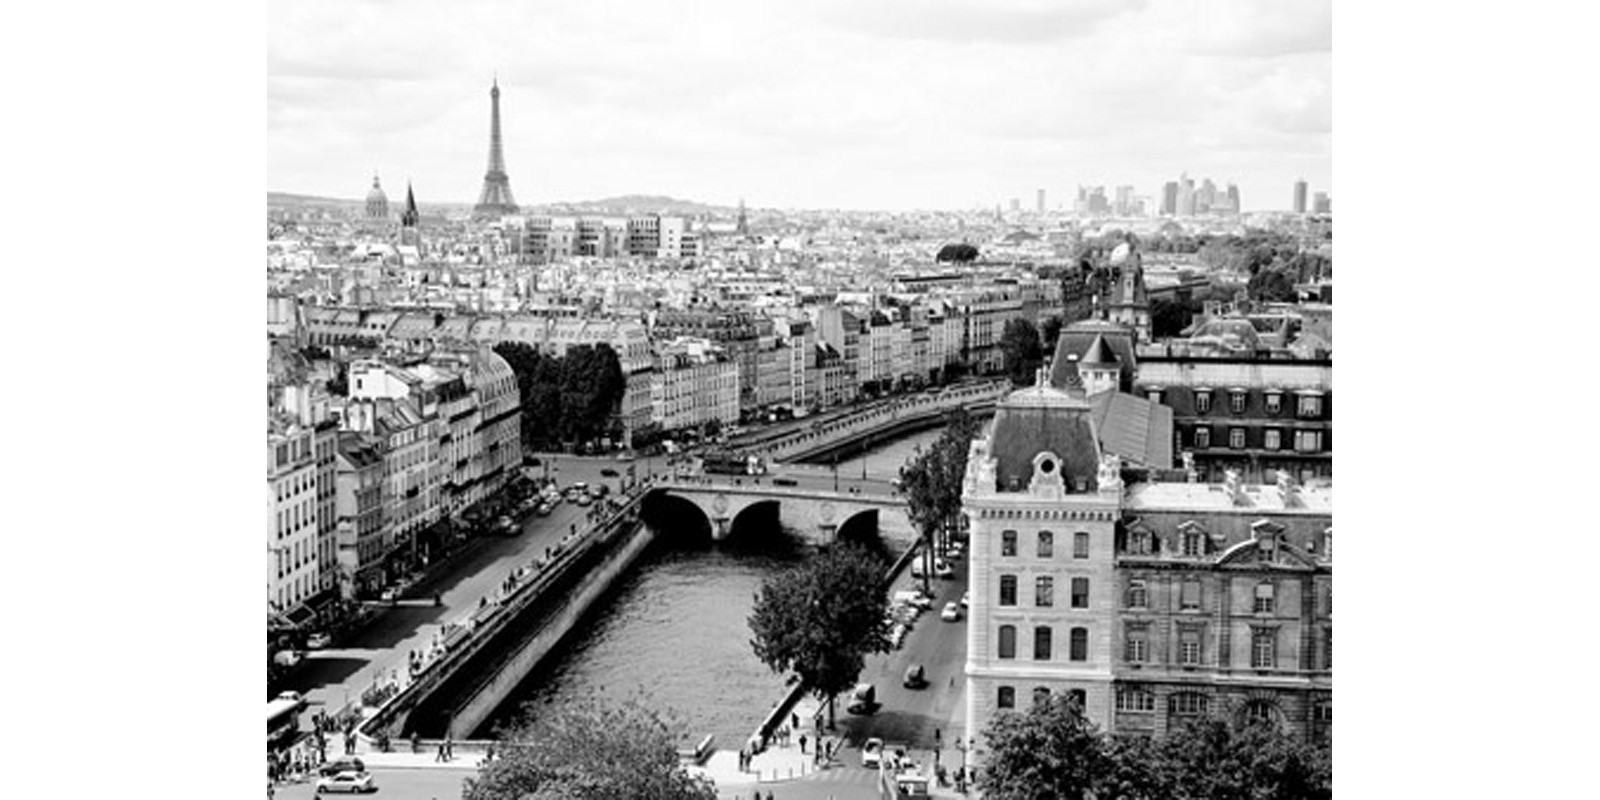 Vadim Ratsenskiy - View of Paris and Seine river